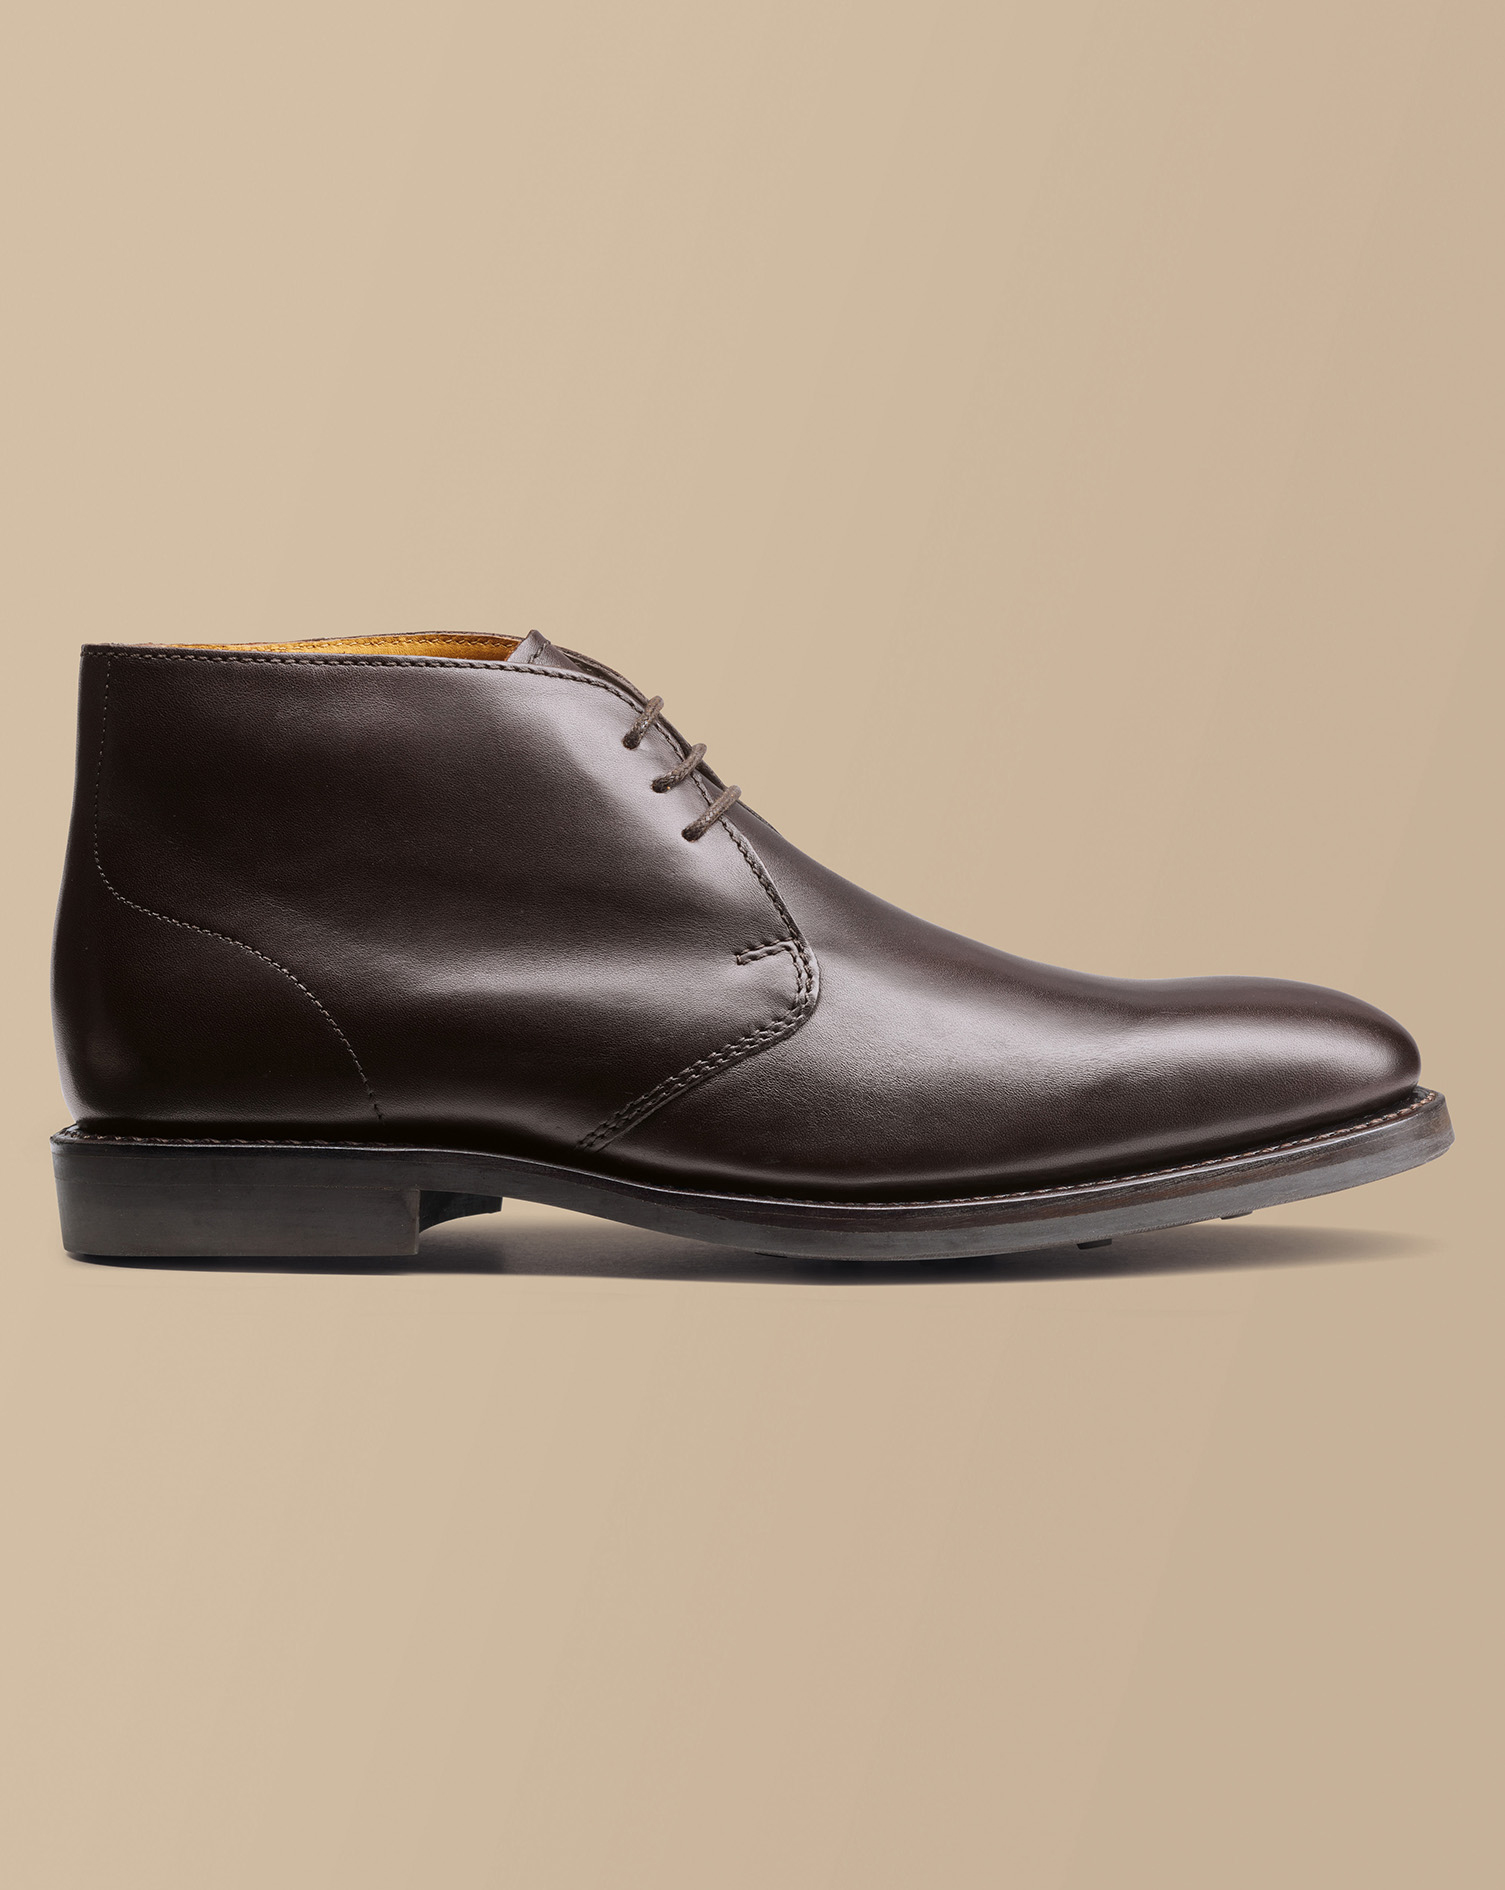 Men's Leather Chukka Boots - Dark Chocolate Brown, 7 R by Charles Tyrwhitt